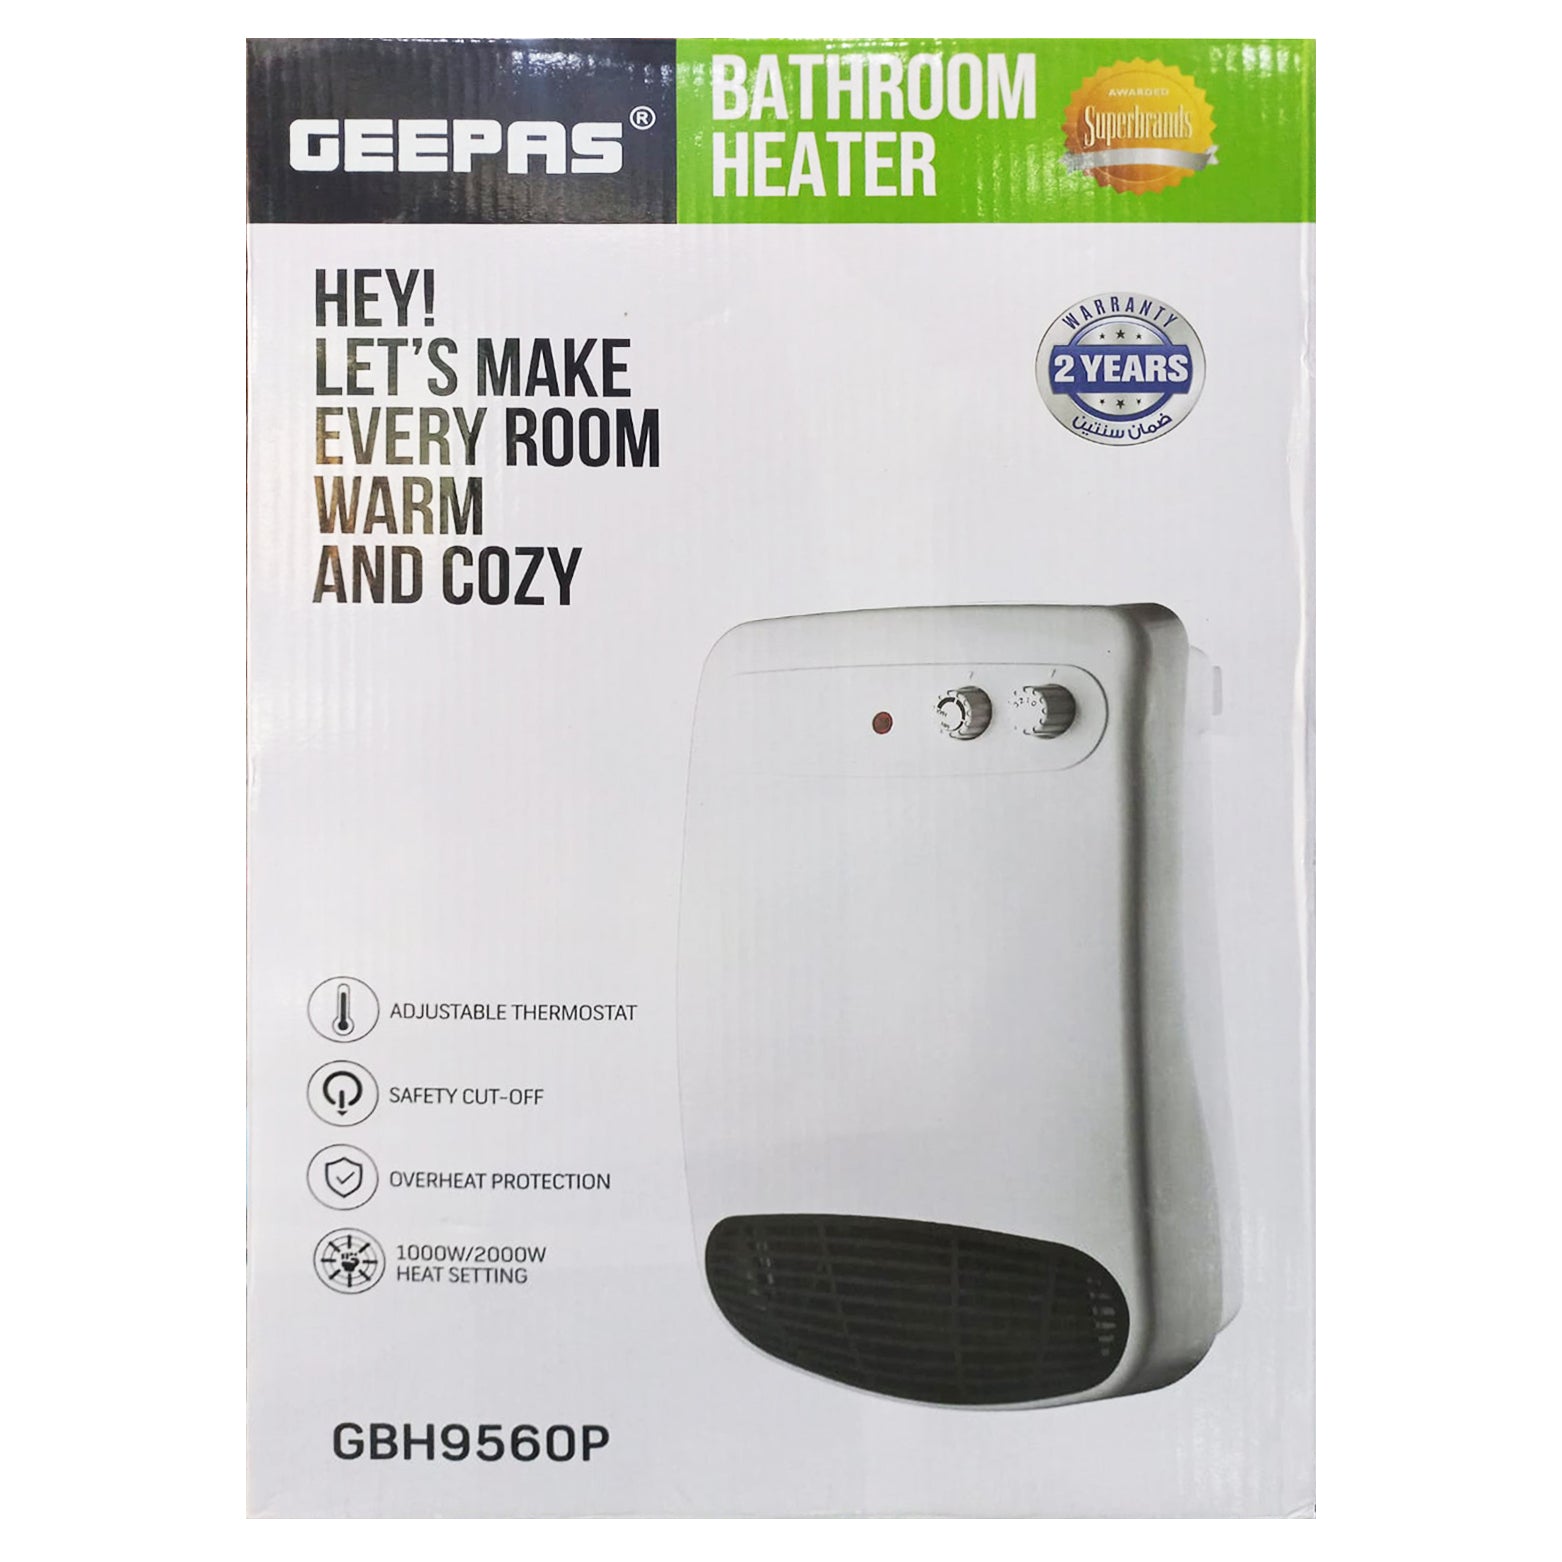 GEEPAS Bathroom Heater - xoxopk.com